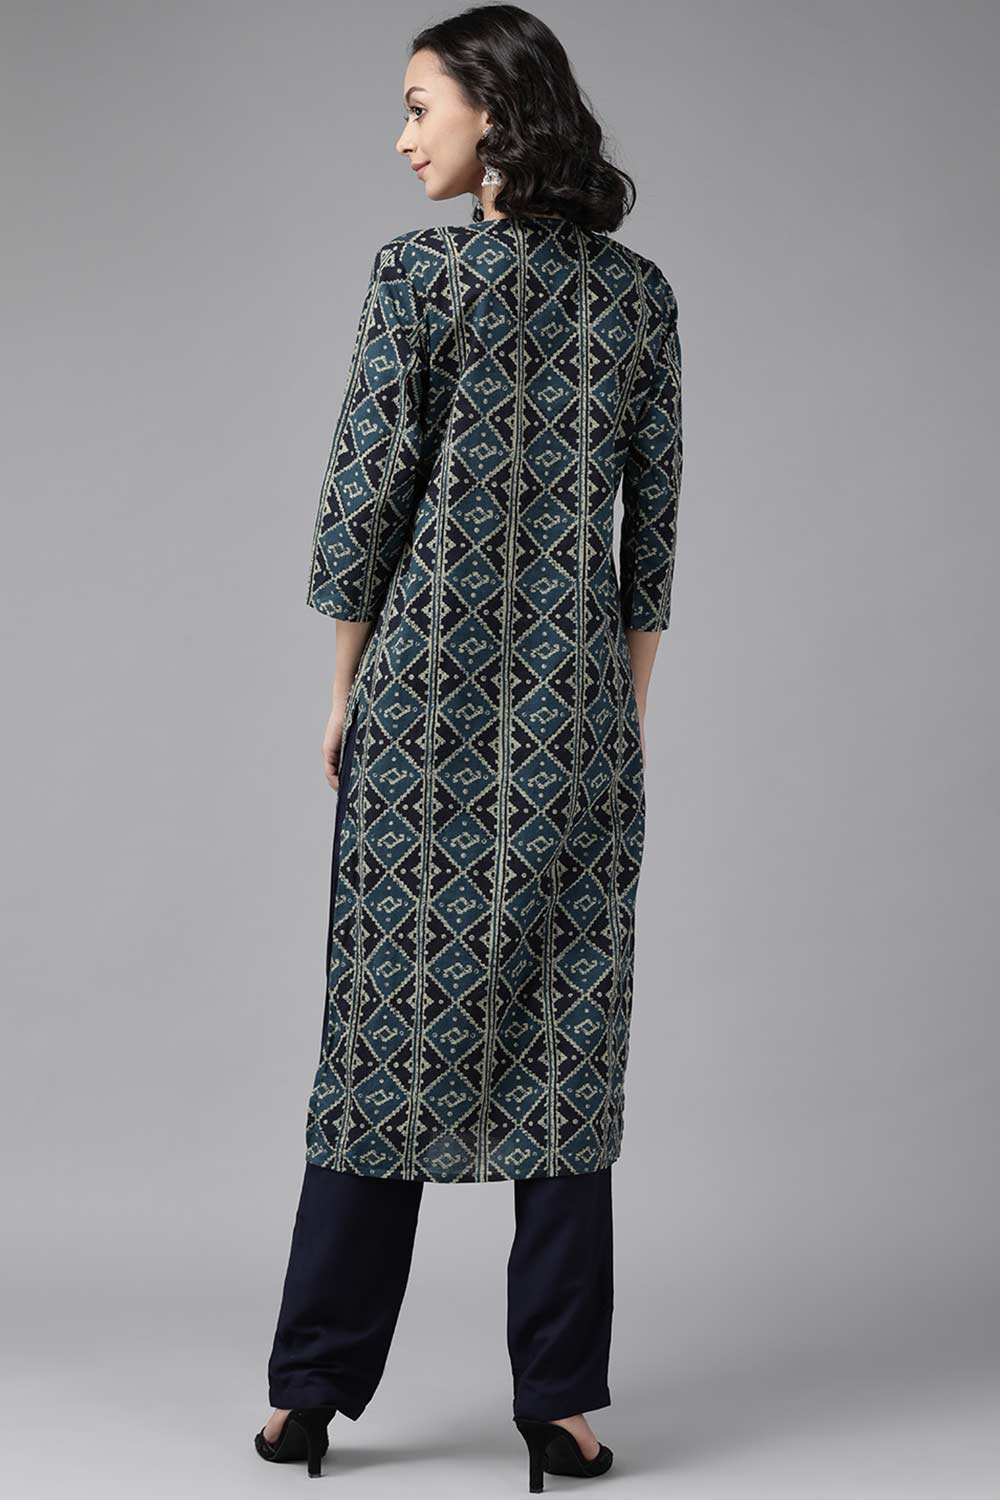 Buy Pure Cotton Batik Block Printed Ready to Wear Kurta Set in Teal Blue Online - Front